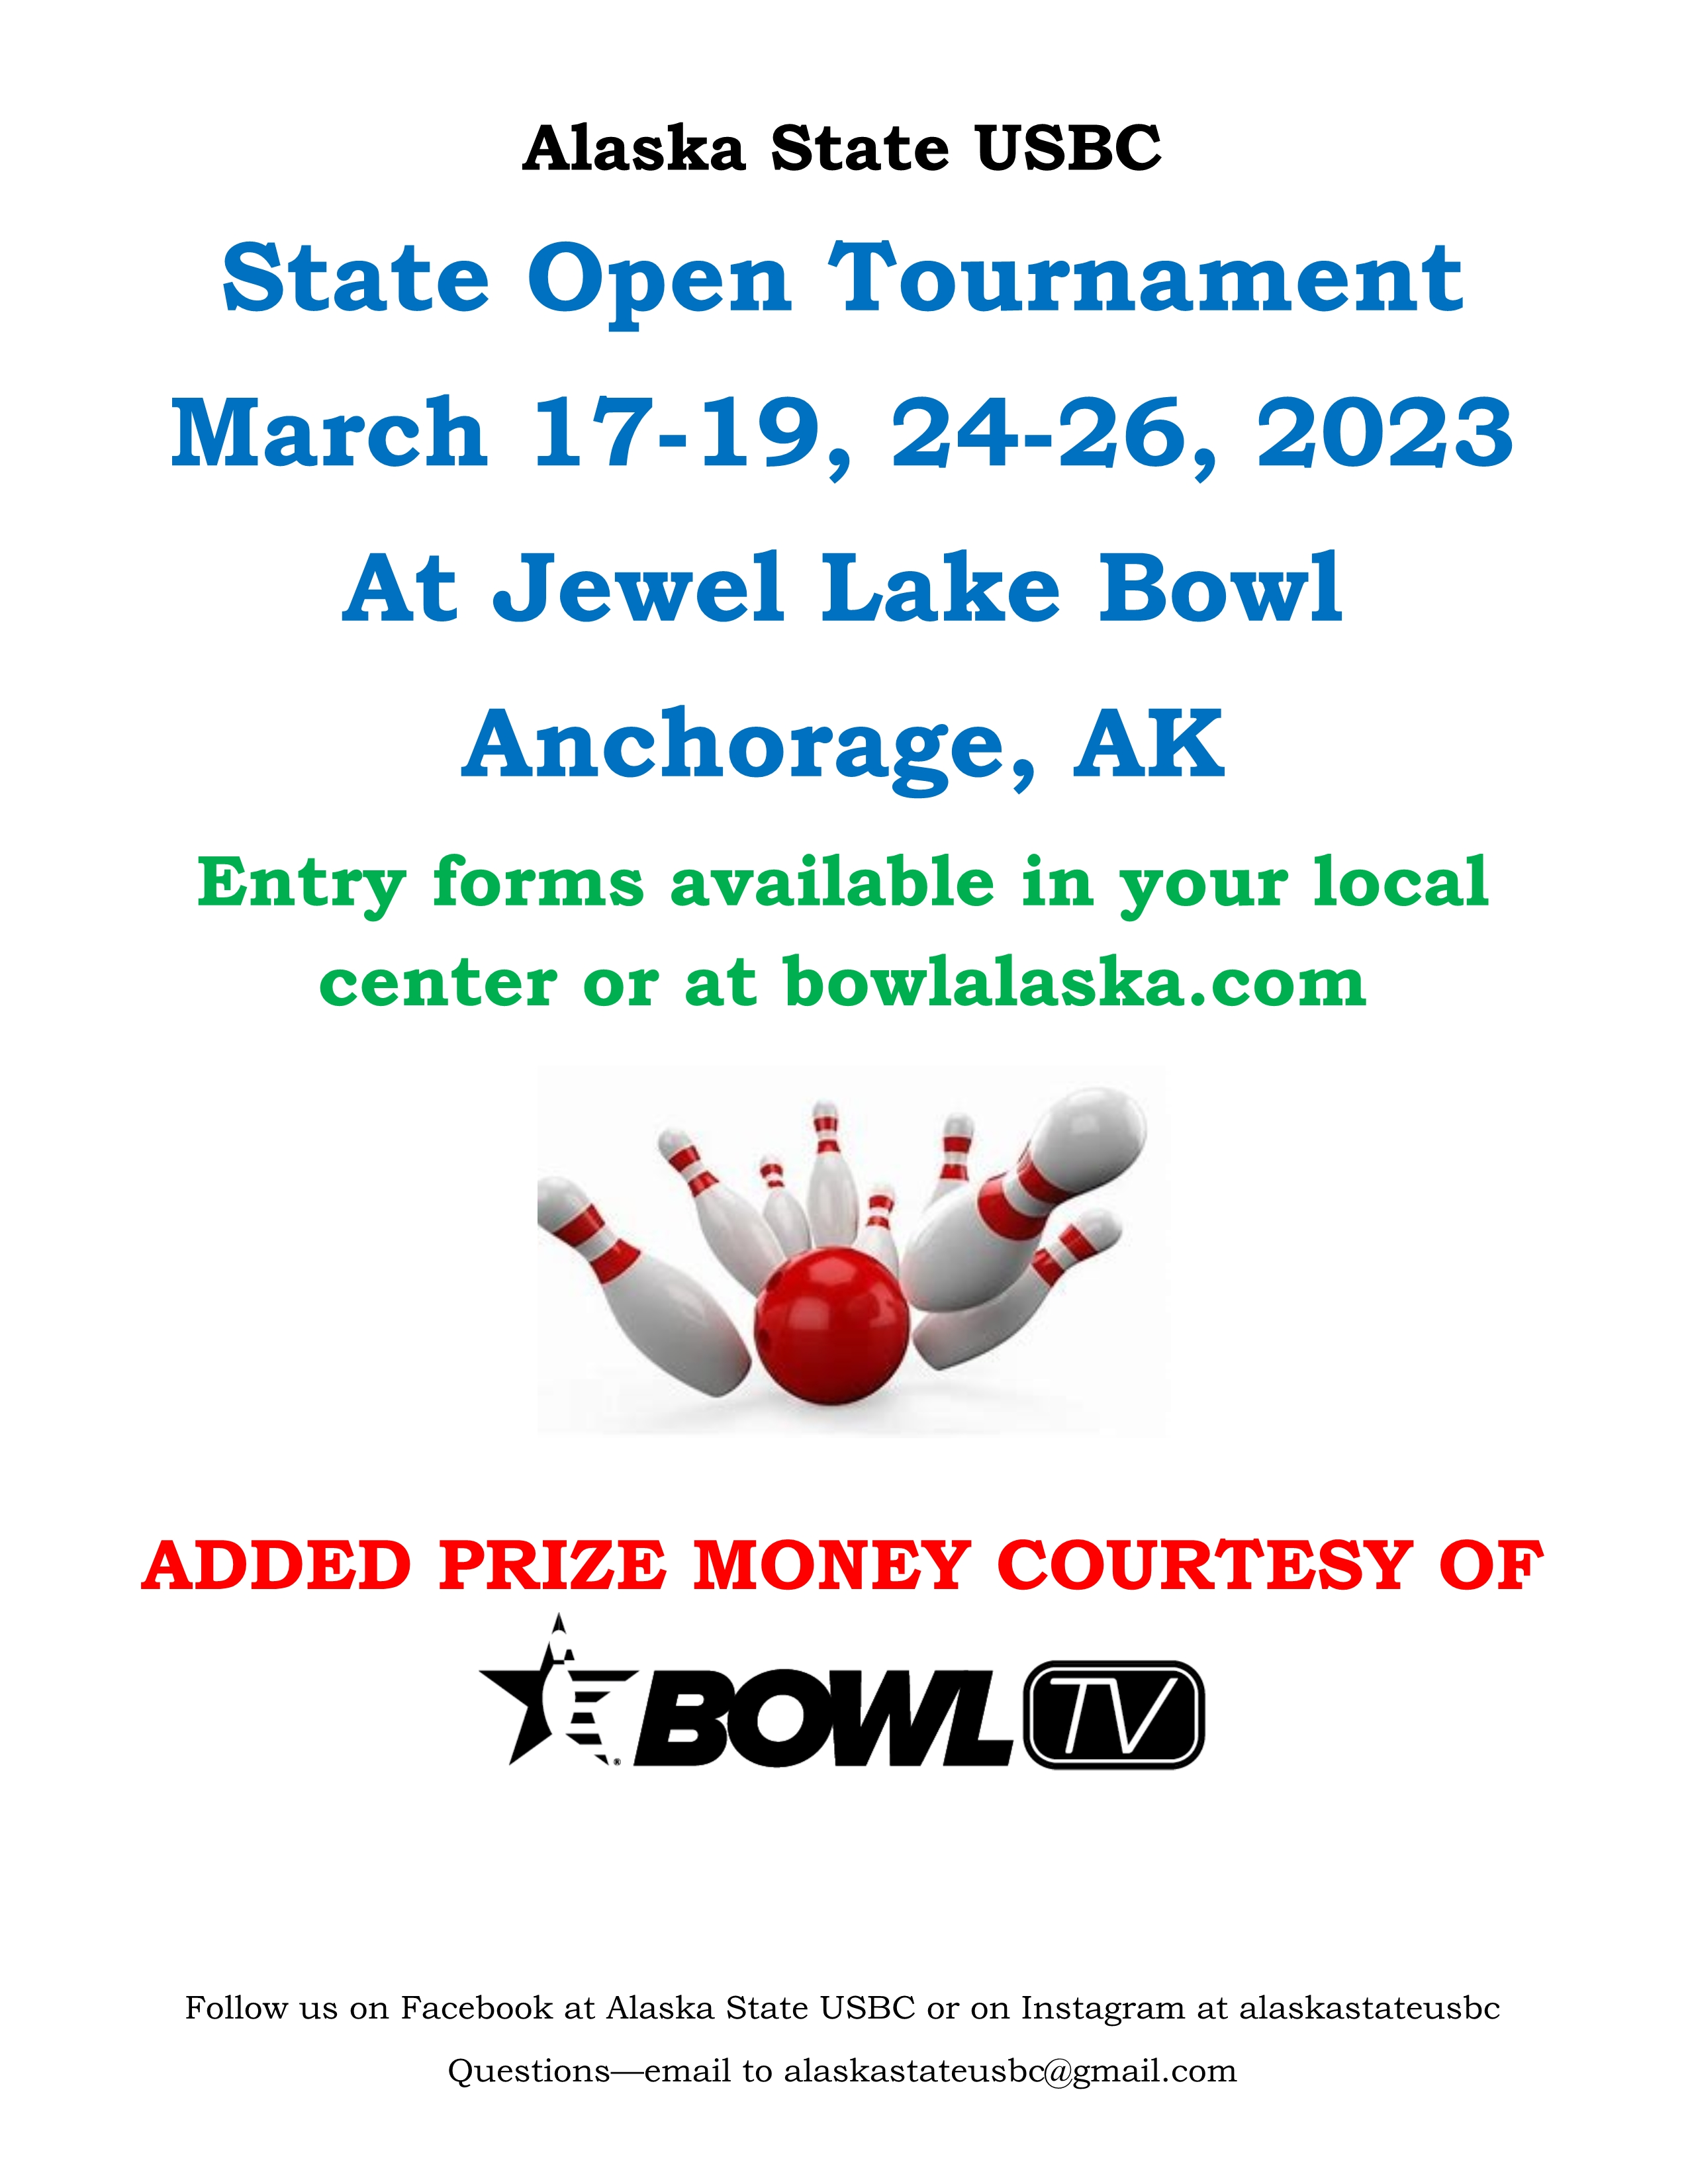 Alaska State USBC 2023 Open Tournament